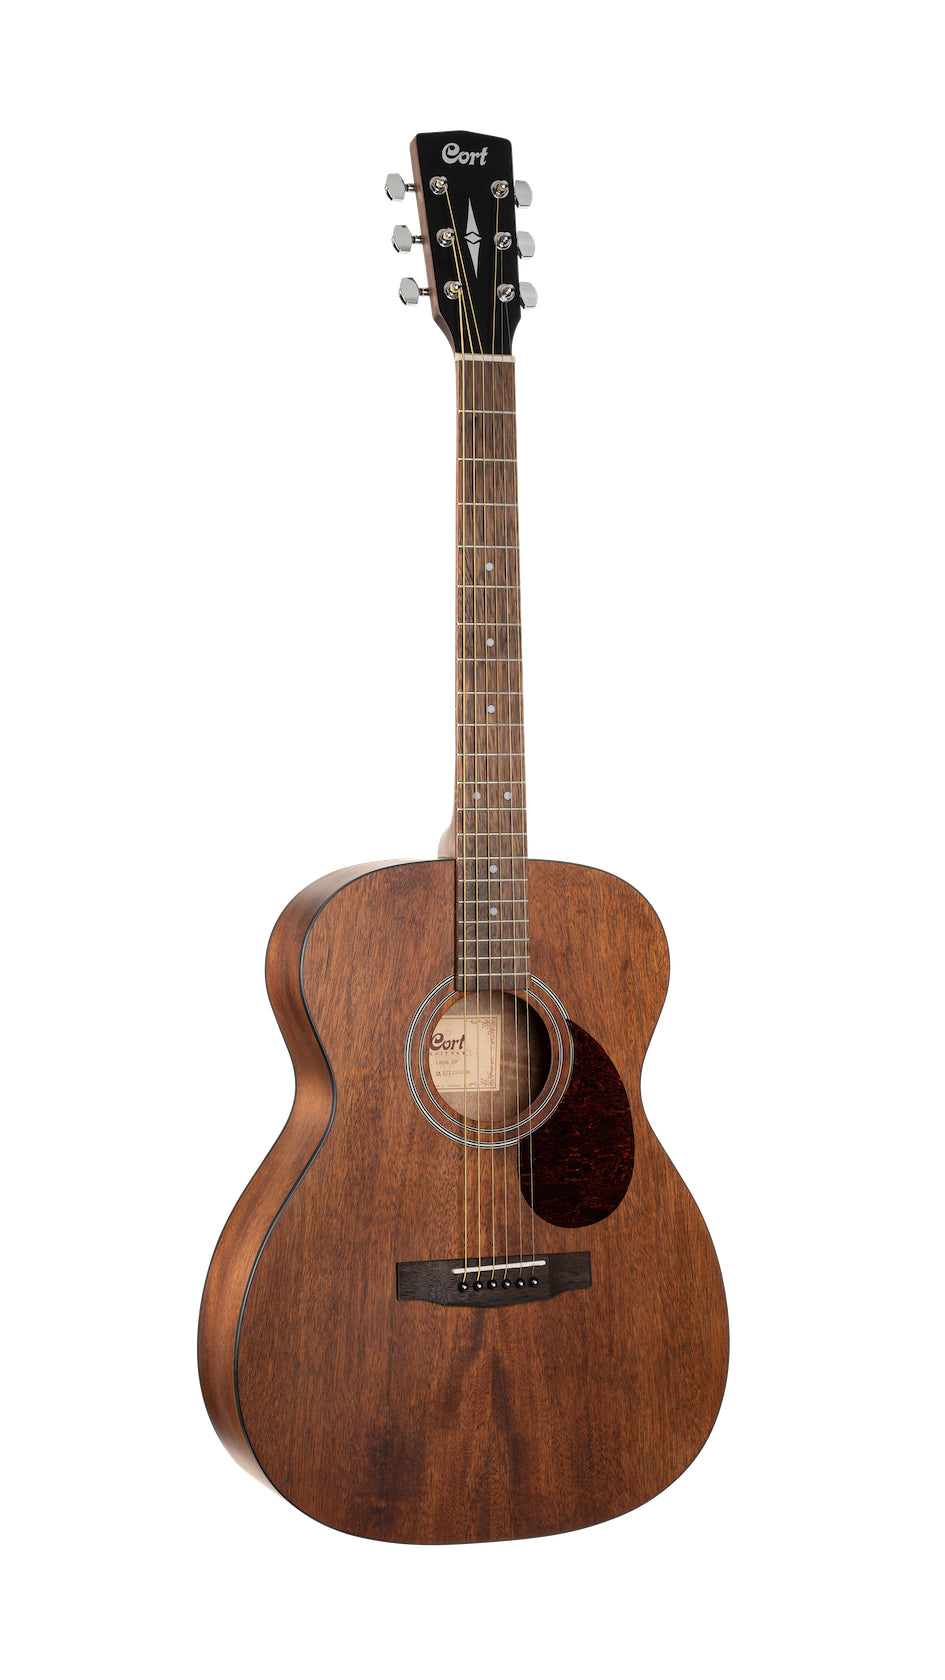 Cort L60 Mahogany Open Pore, Acoustic Guitar for sale at Richards Guitars.